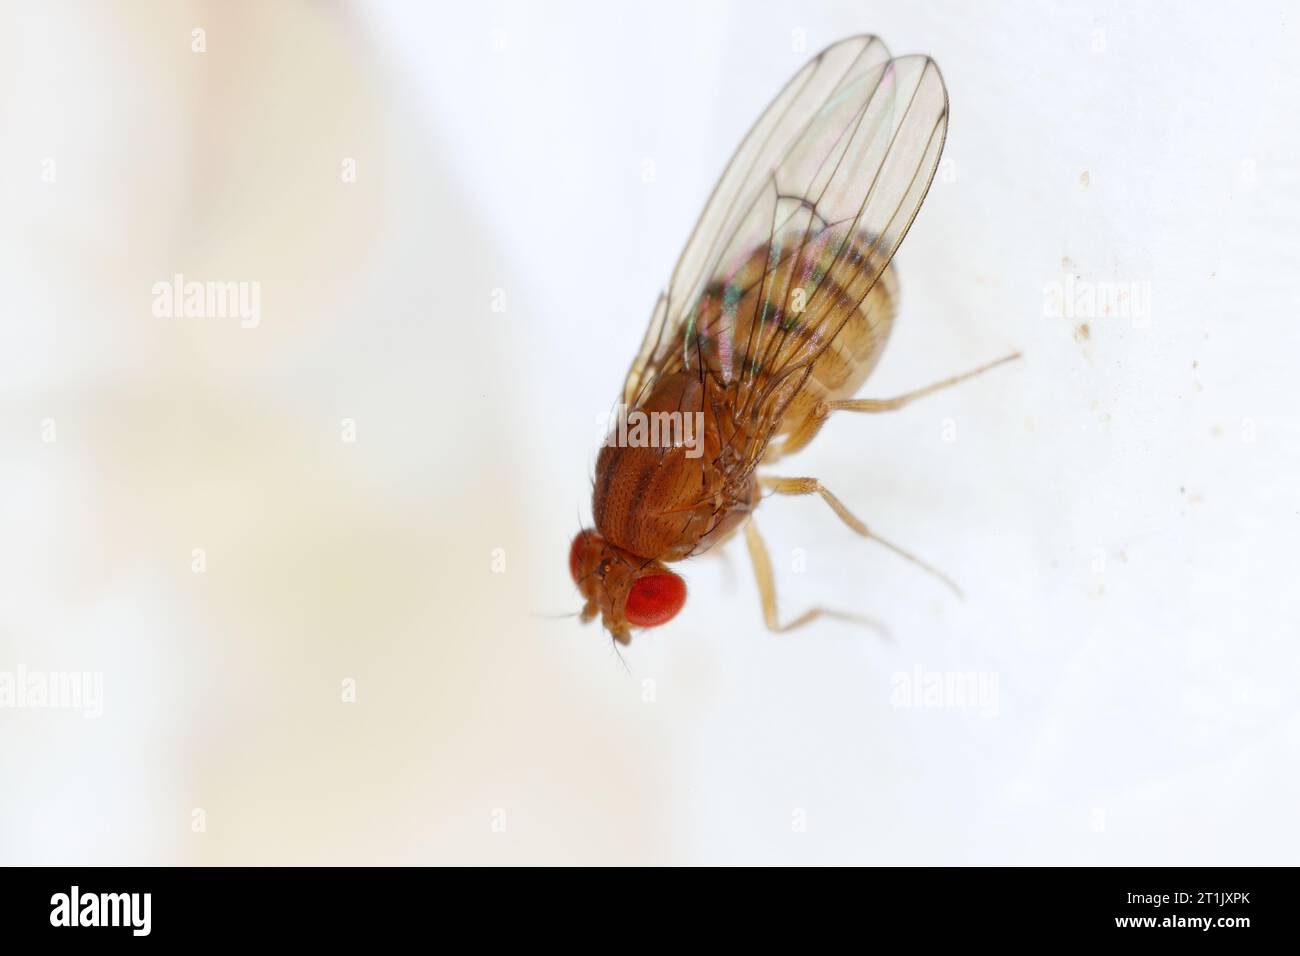 Drosophila melanogaster fruit fly extreme close up macro Banque D'Images